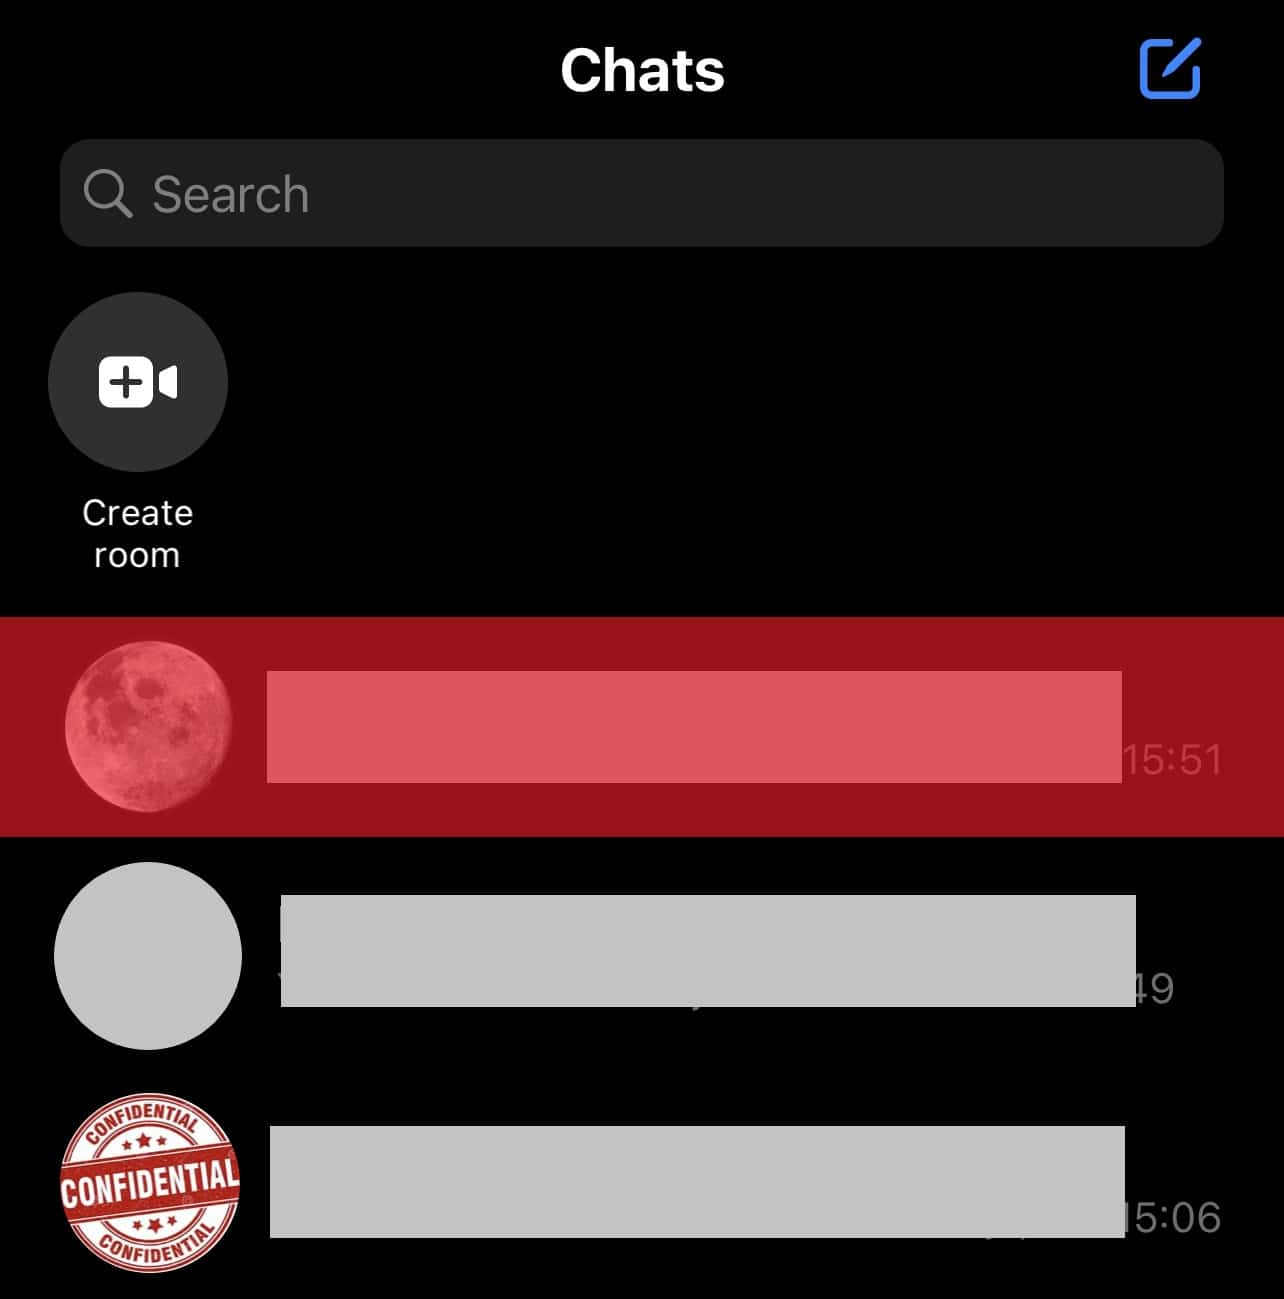 Chats On Facebook Messenger Mobile App